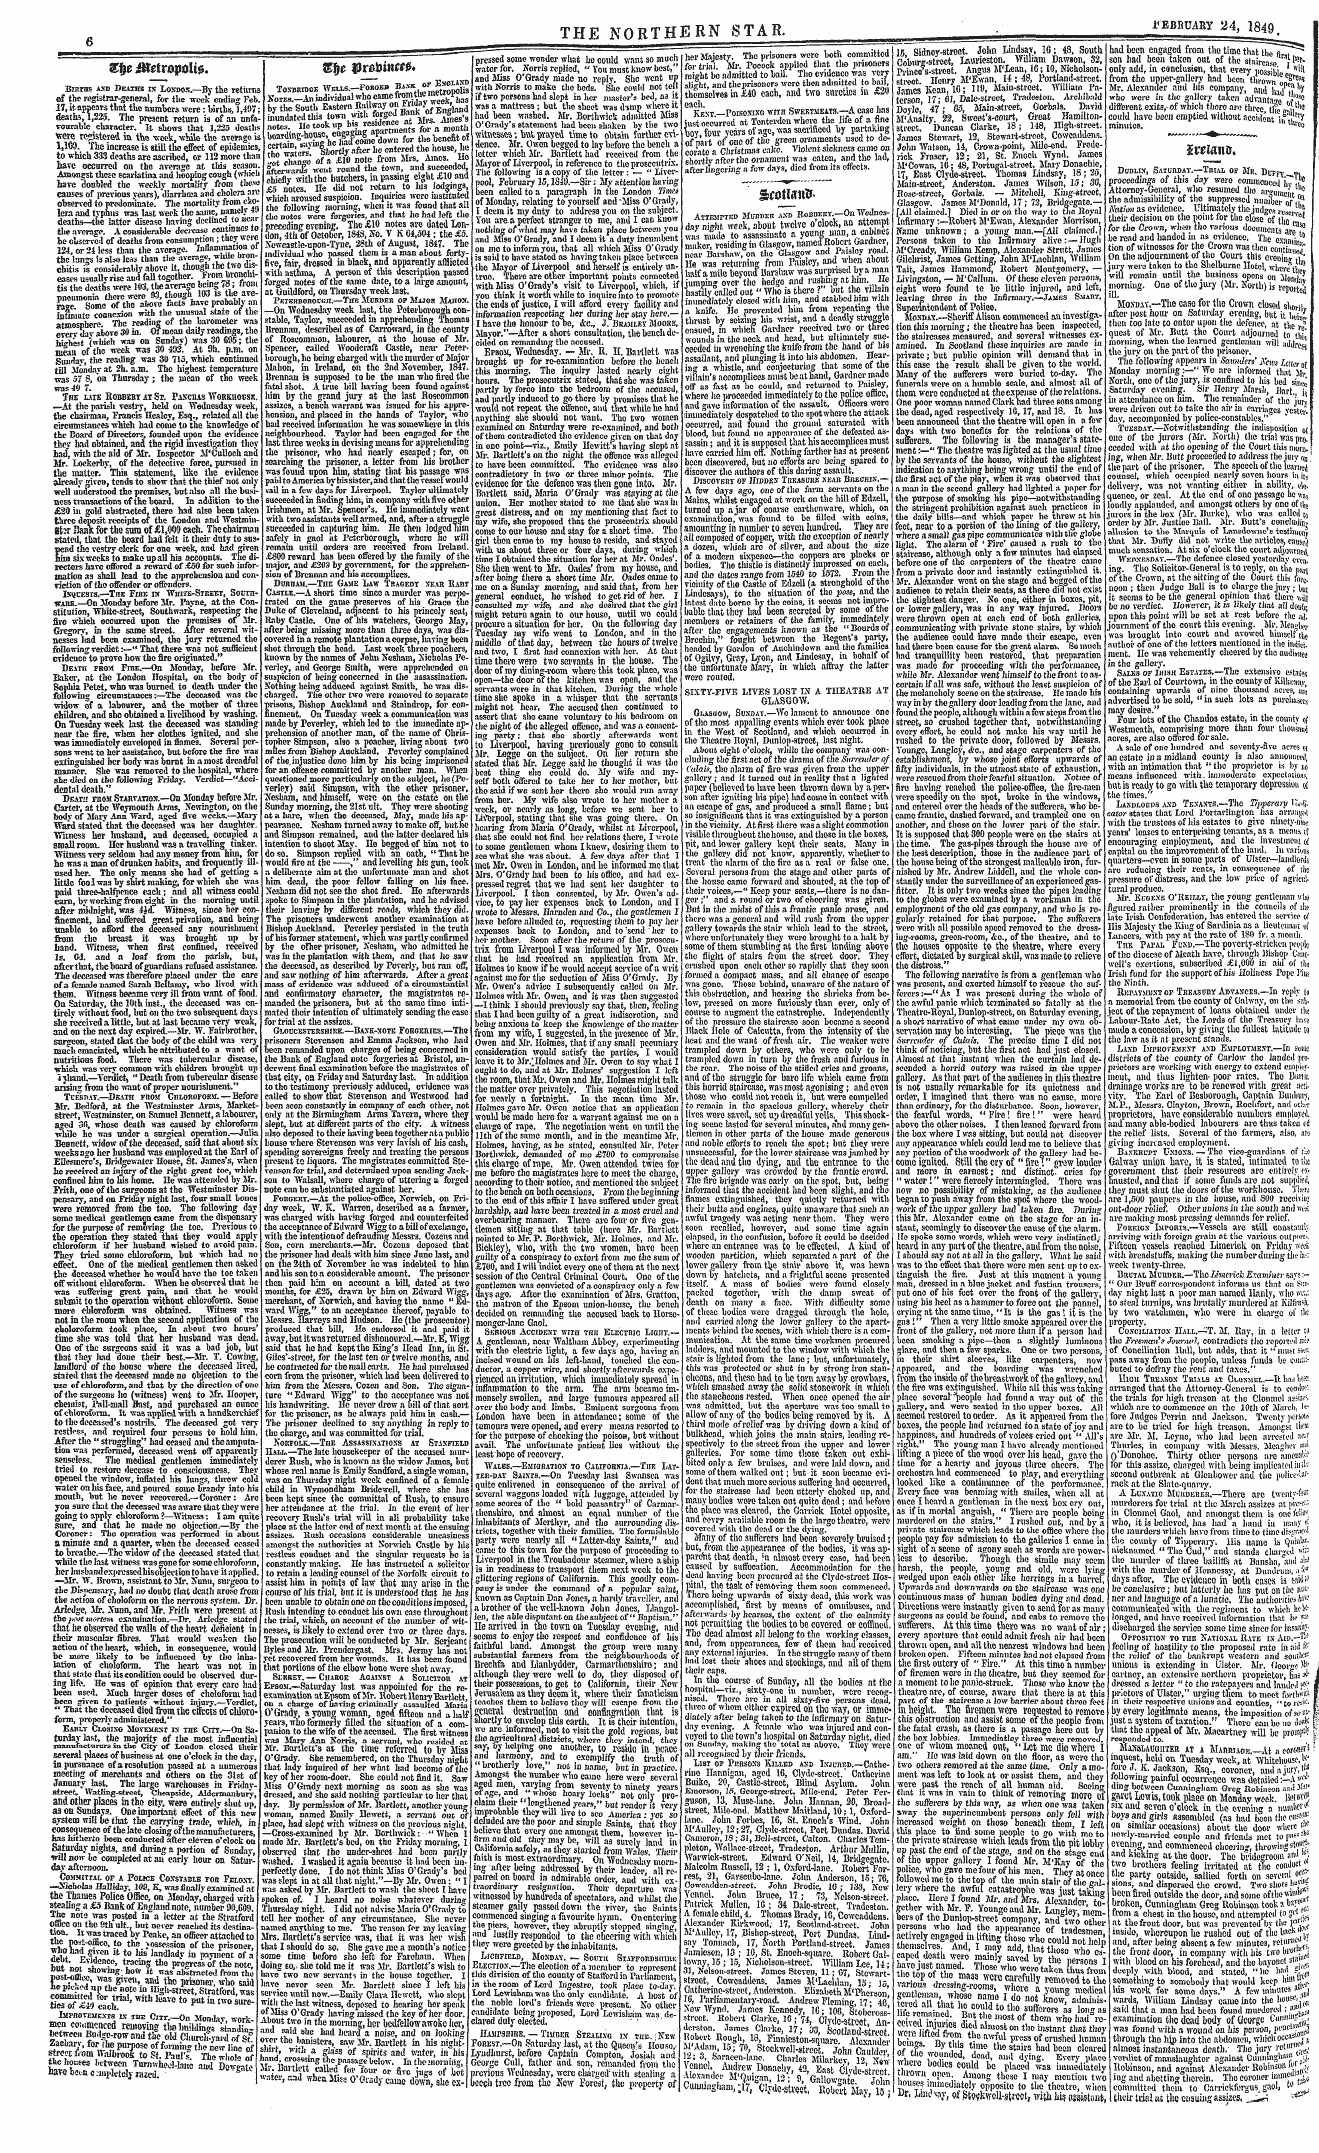 Northern Star (1837-1852): jS F Y, 3rd edition - Dcblix, Saturday.—Trial Ou Mr. Duffy -.T...